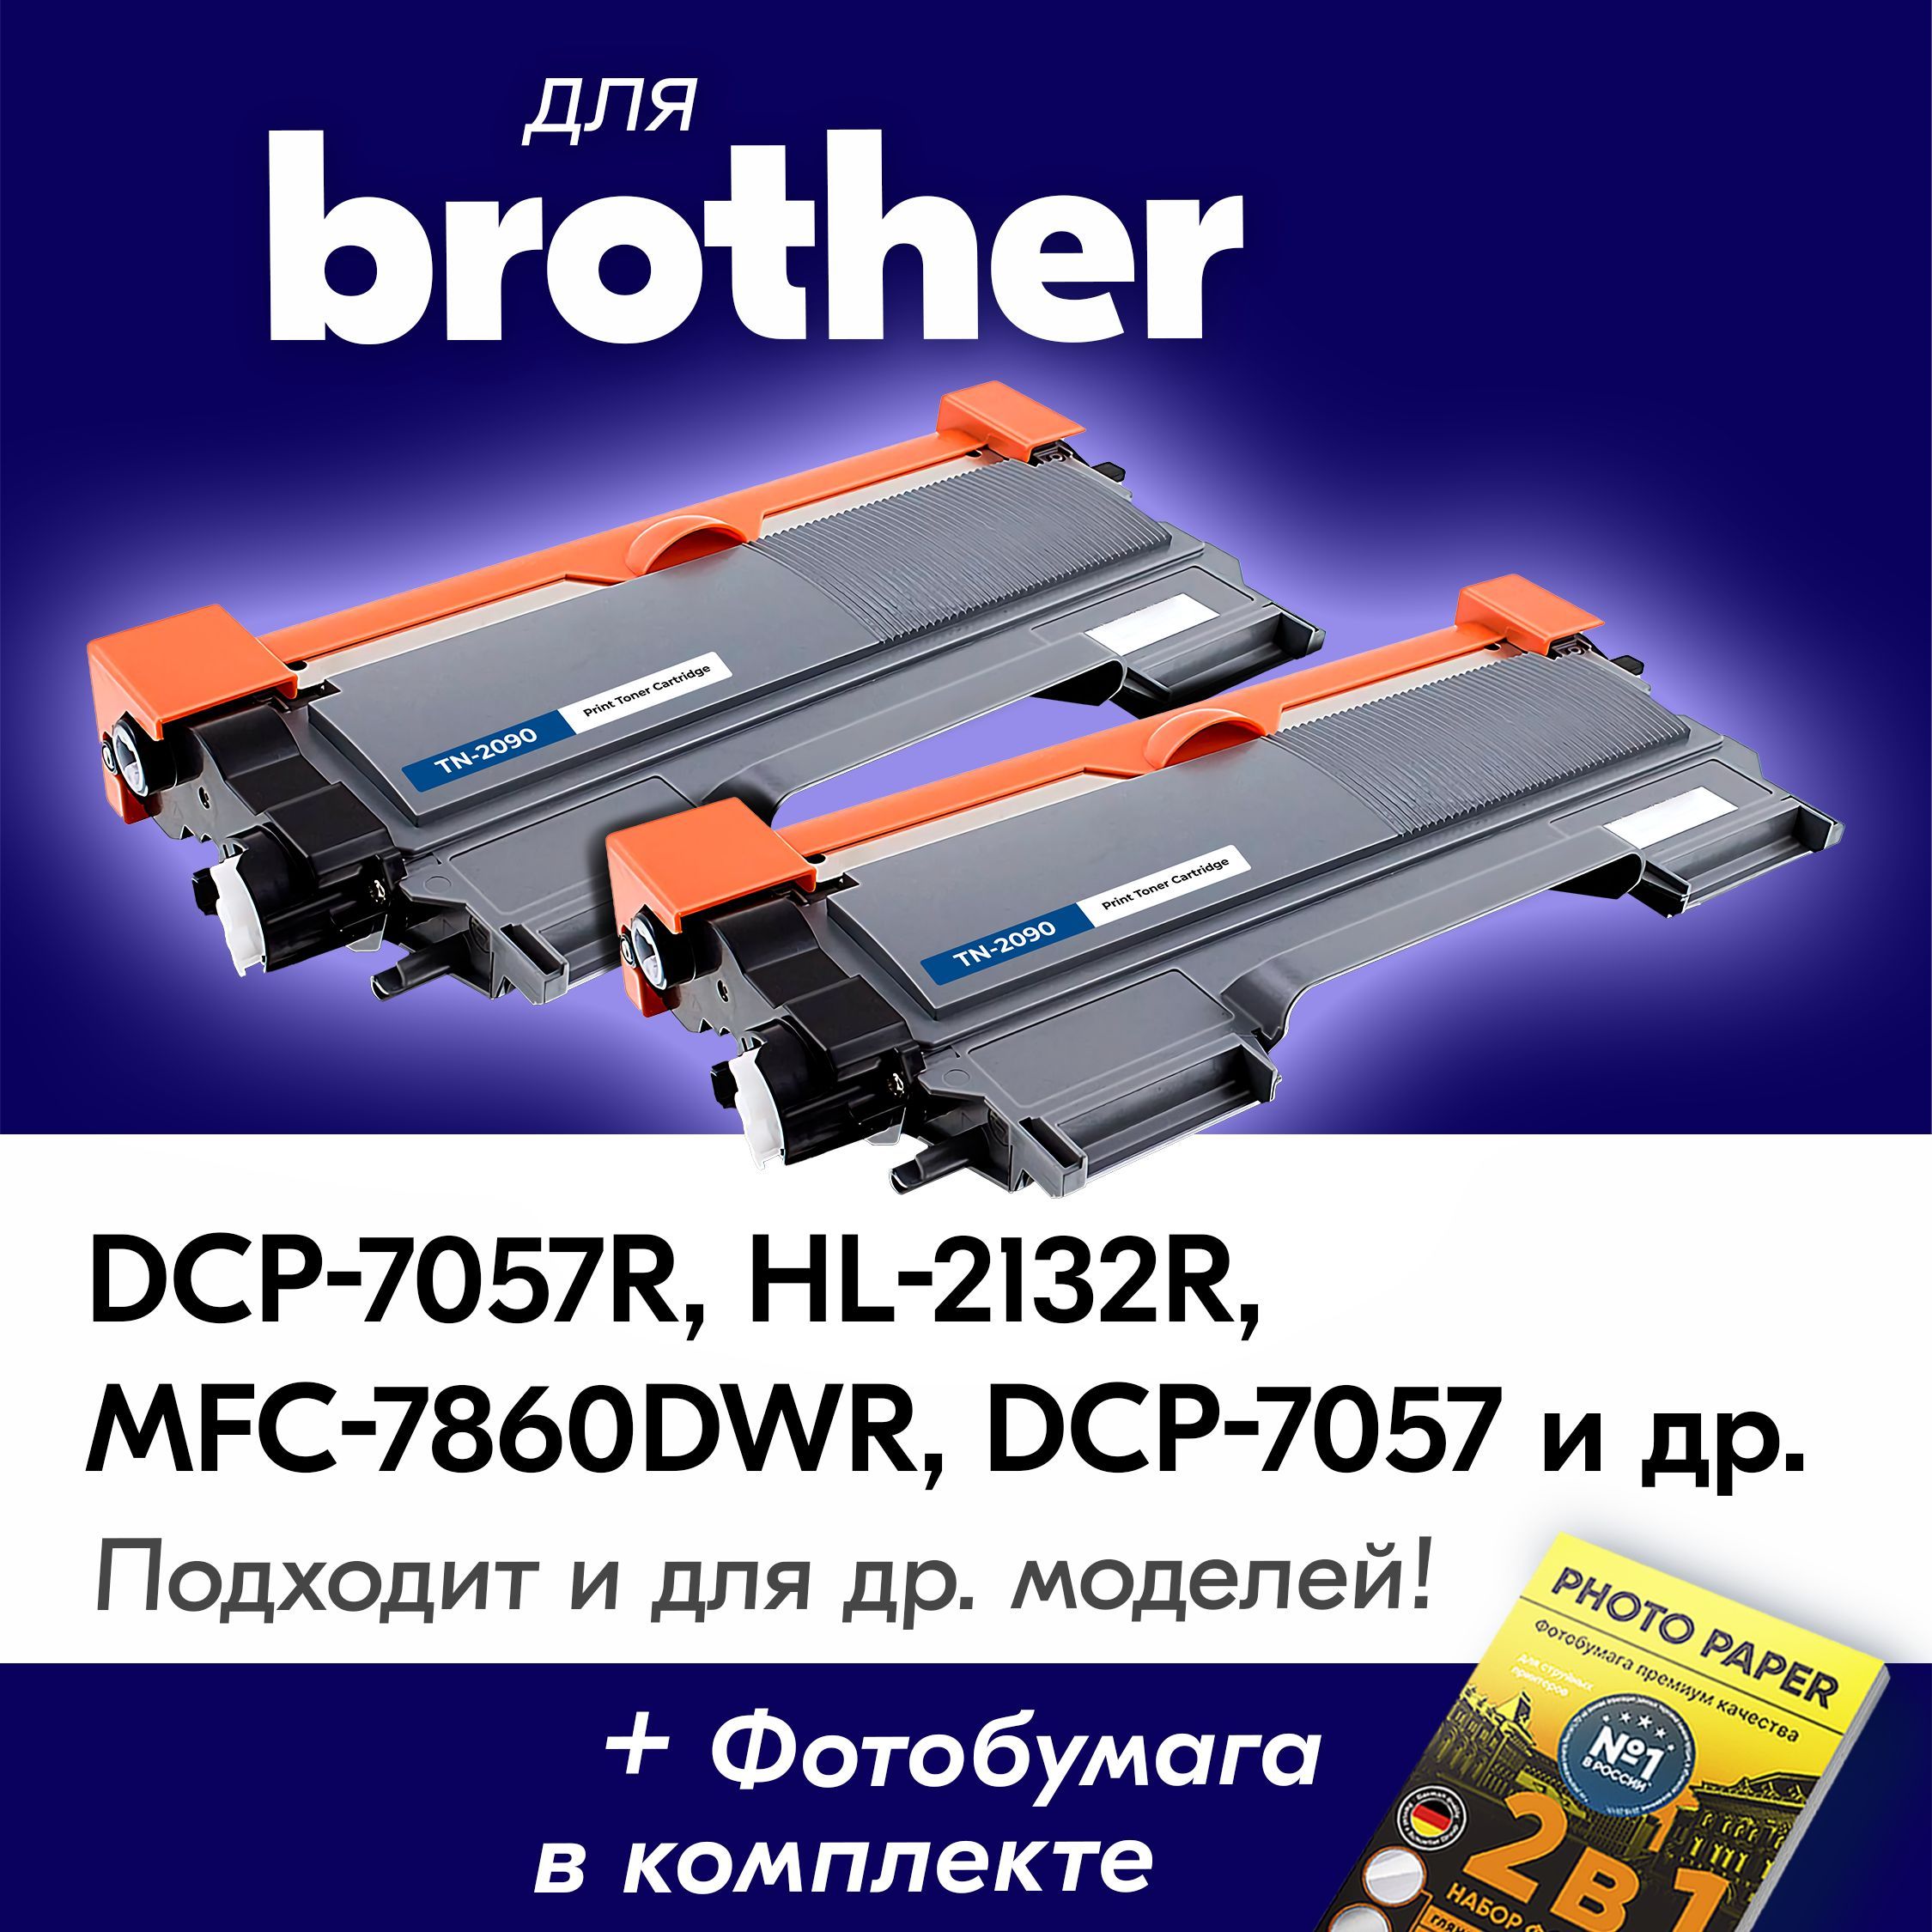 Тонер 2132r. Brother DCP 7070dwr. DCP 7070dwr картридж. DCP-7057r. 7057r brother.